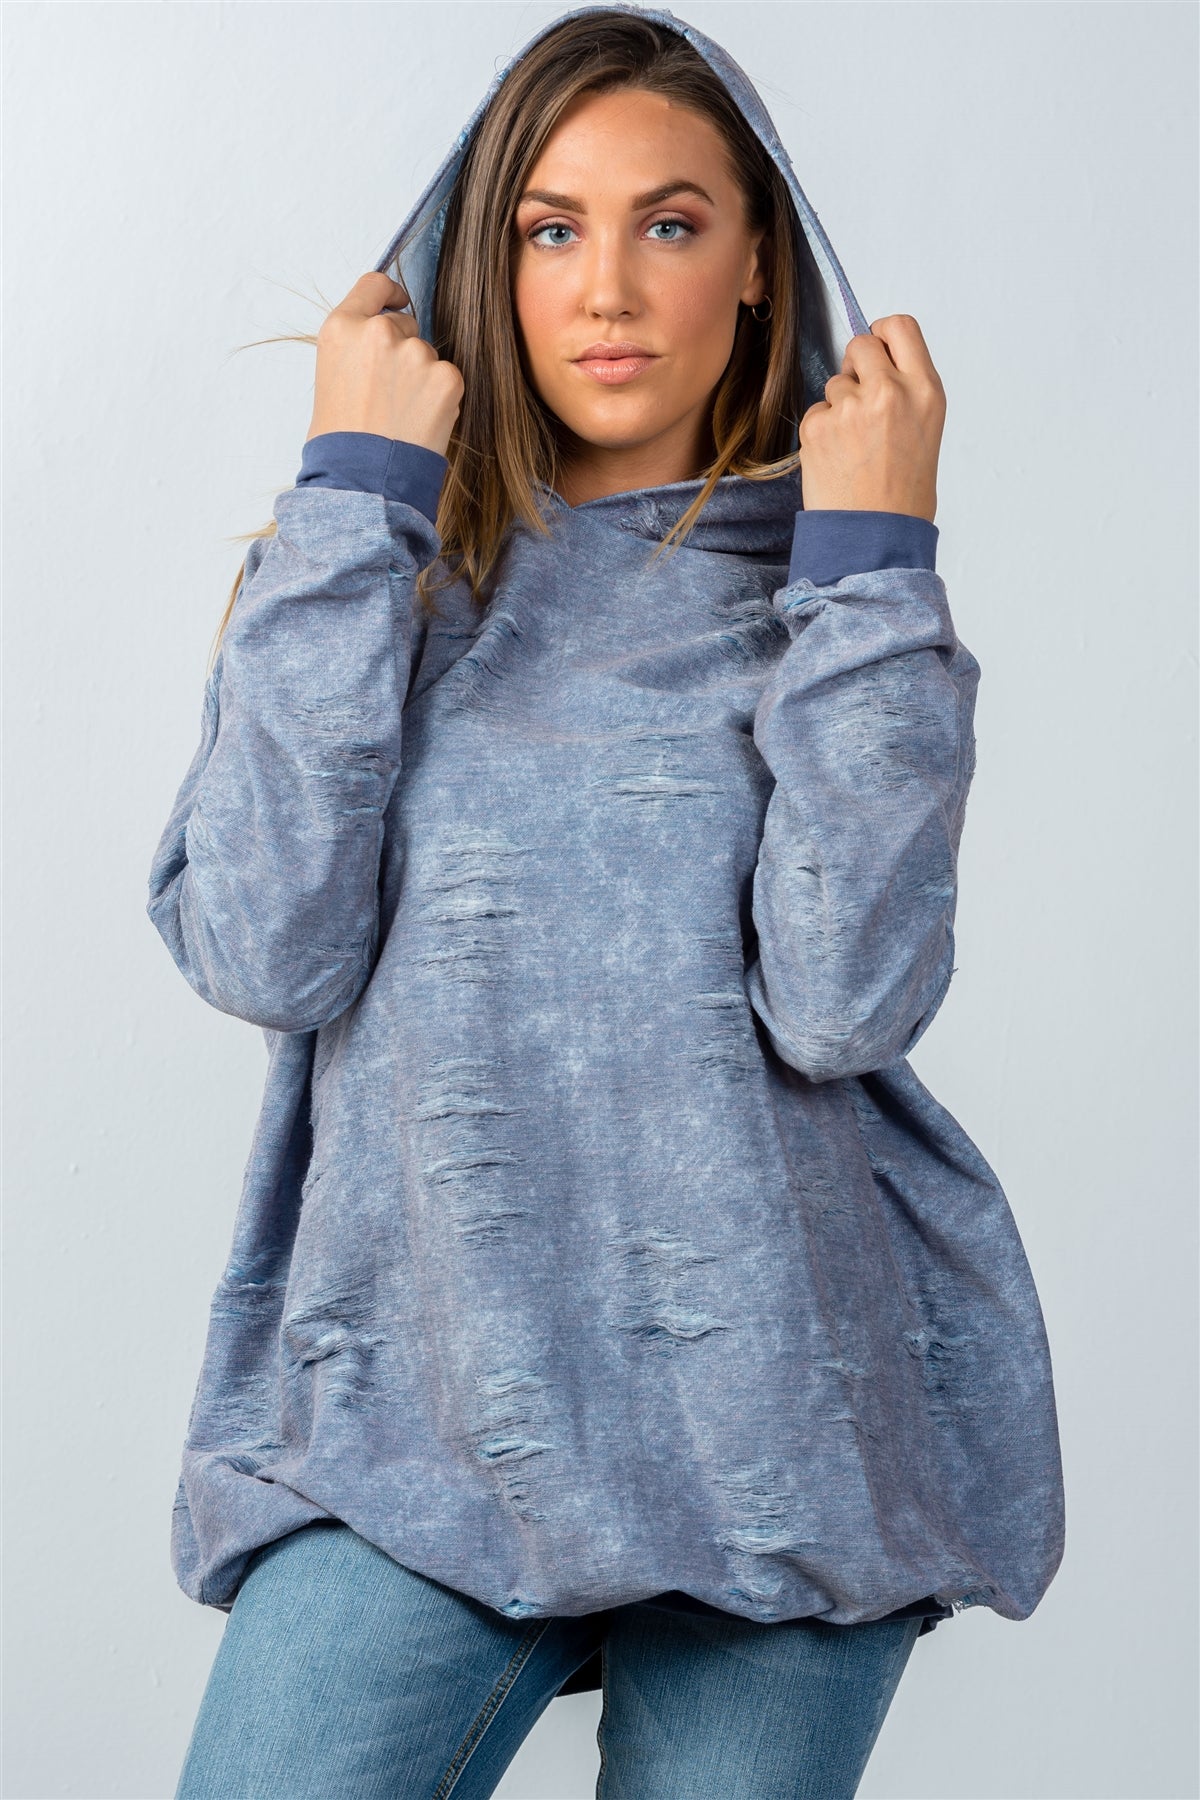 Ladies fashion dark blue oversized distressed hooded sweater